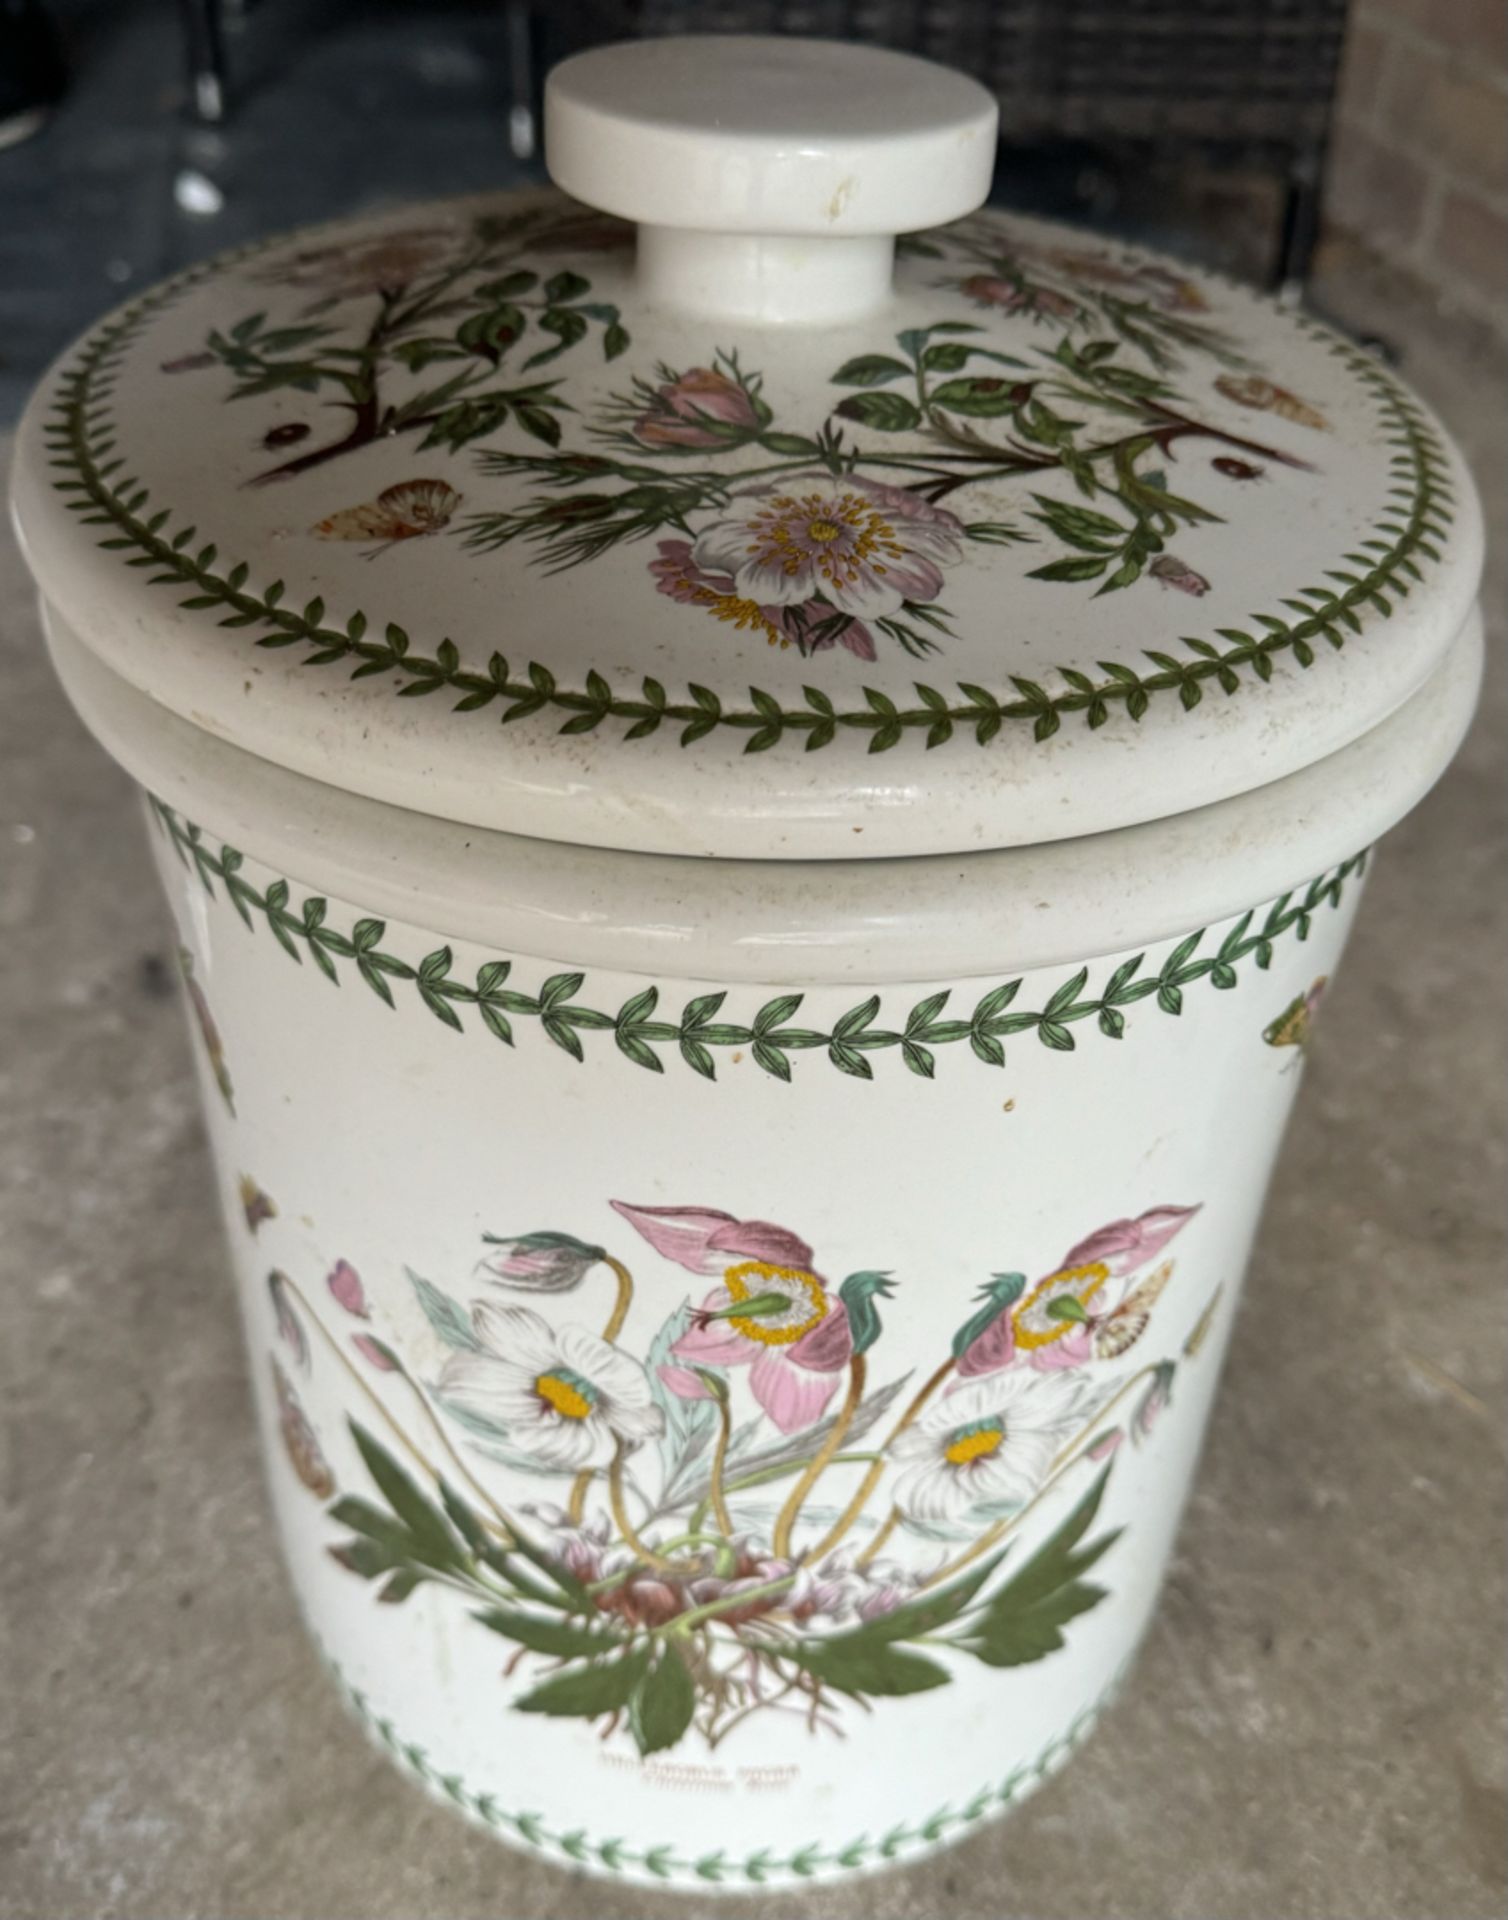 20th Century Ceramics: Portmeirion "Botanic Garden" Wild Rose Bread Bin - Image 2 of 3